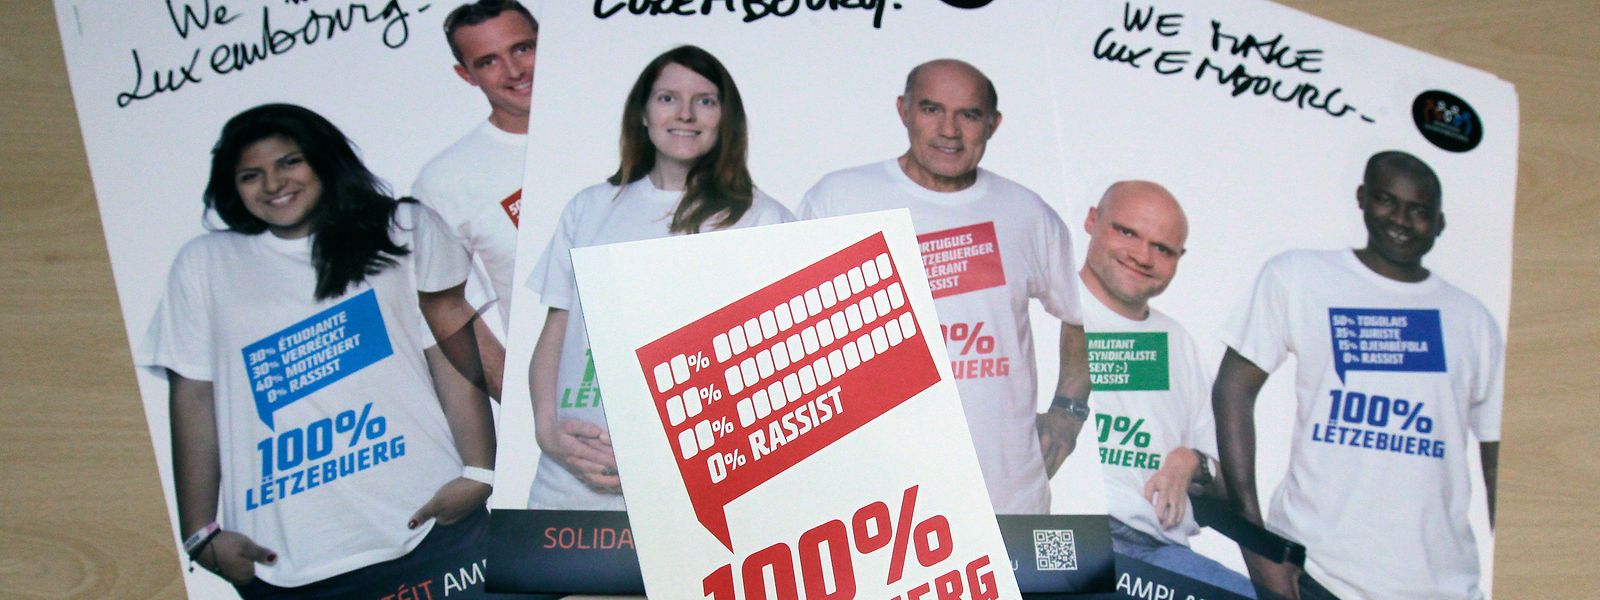 12.11.12 conference de presse presentation campagne de solidarite  " we make luxembourg" gare, cfl, photo: Marc Wilwert